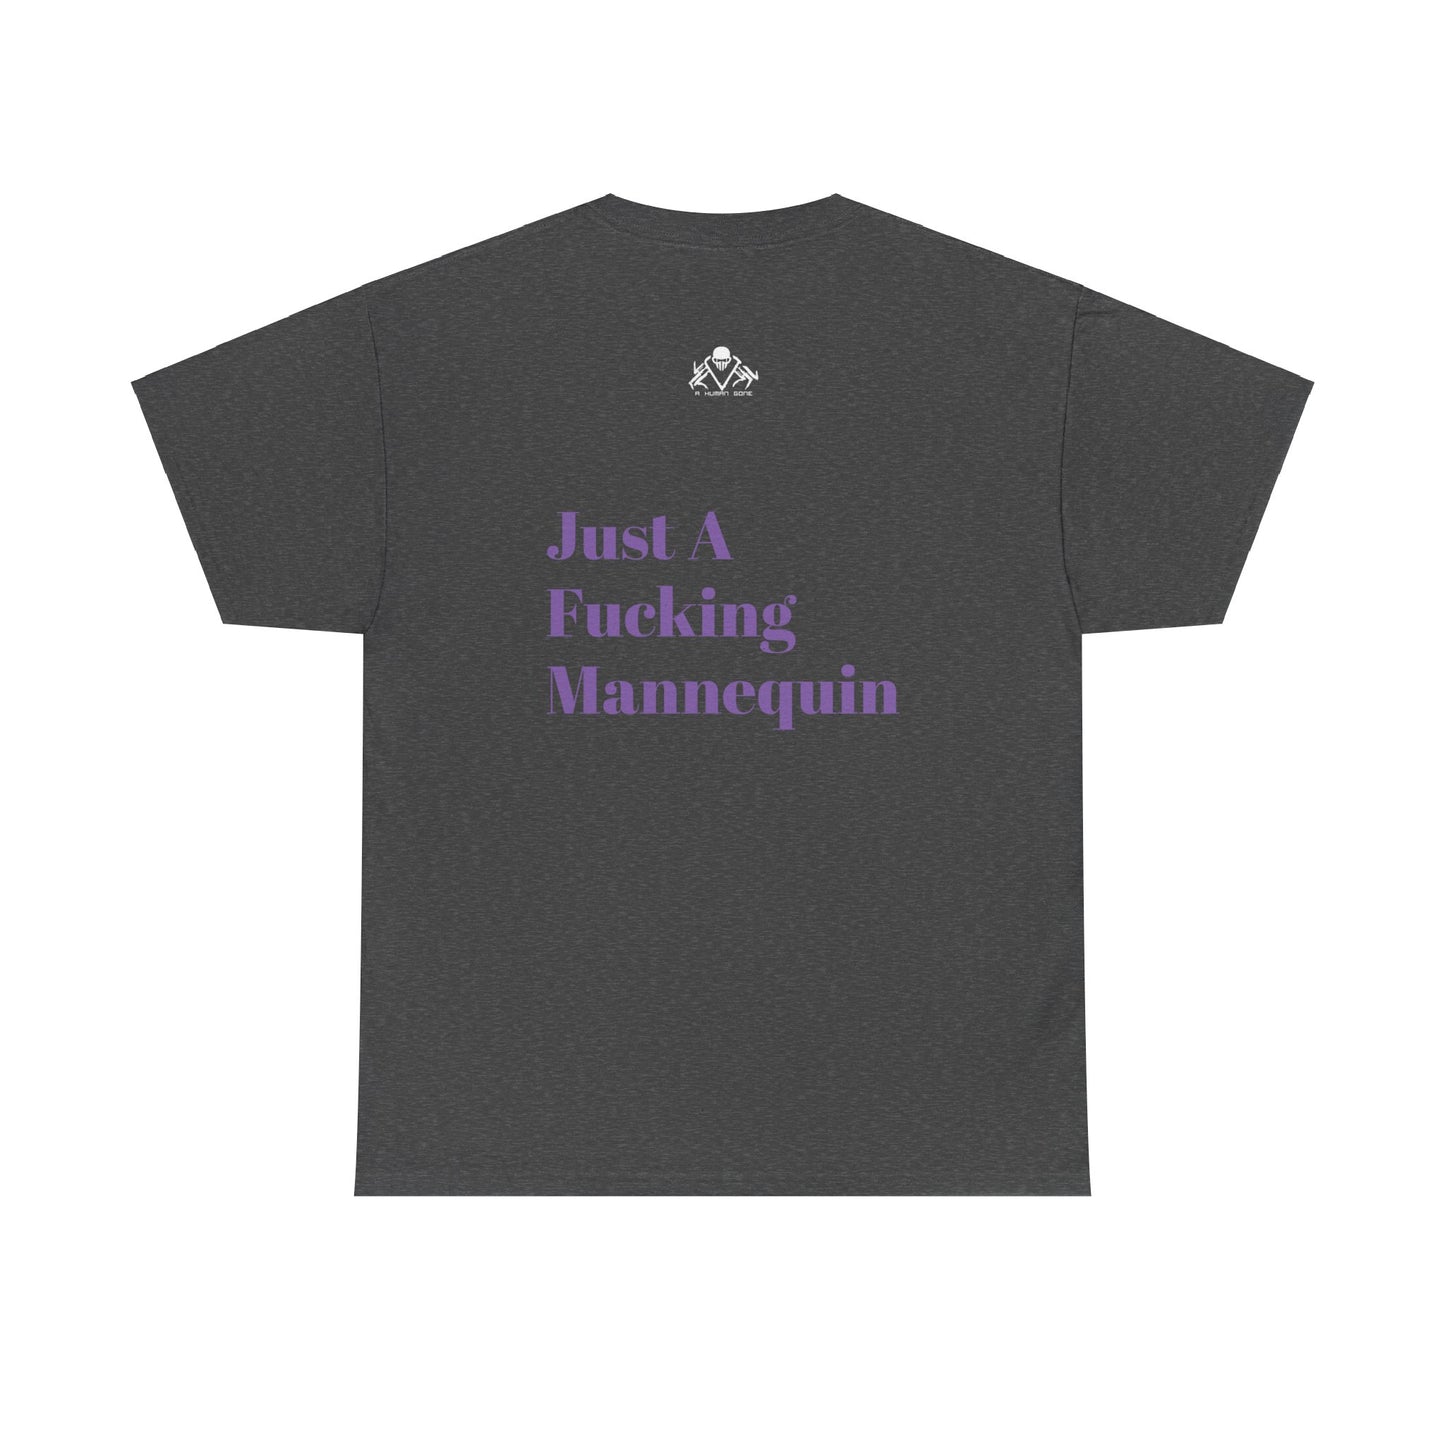 'Mannequin' T-Shirt